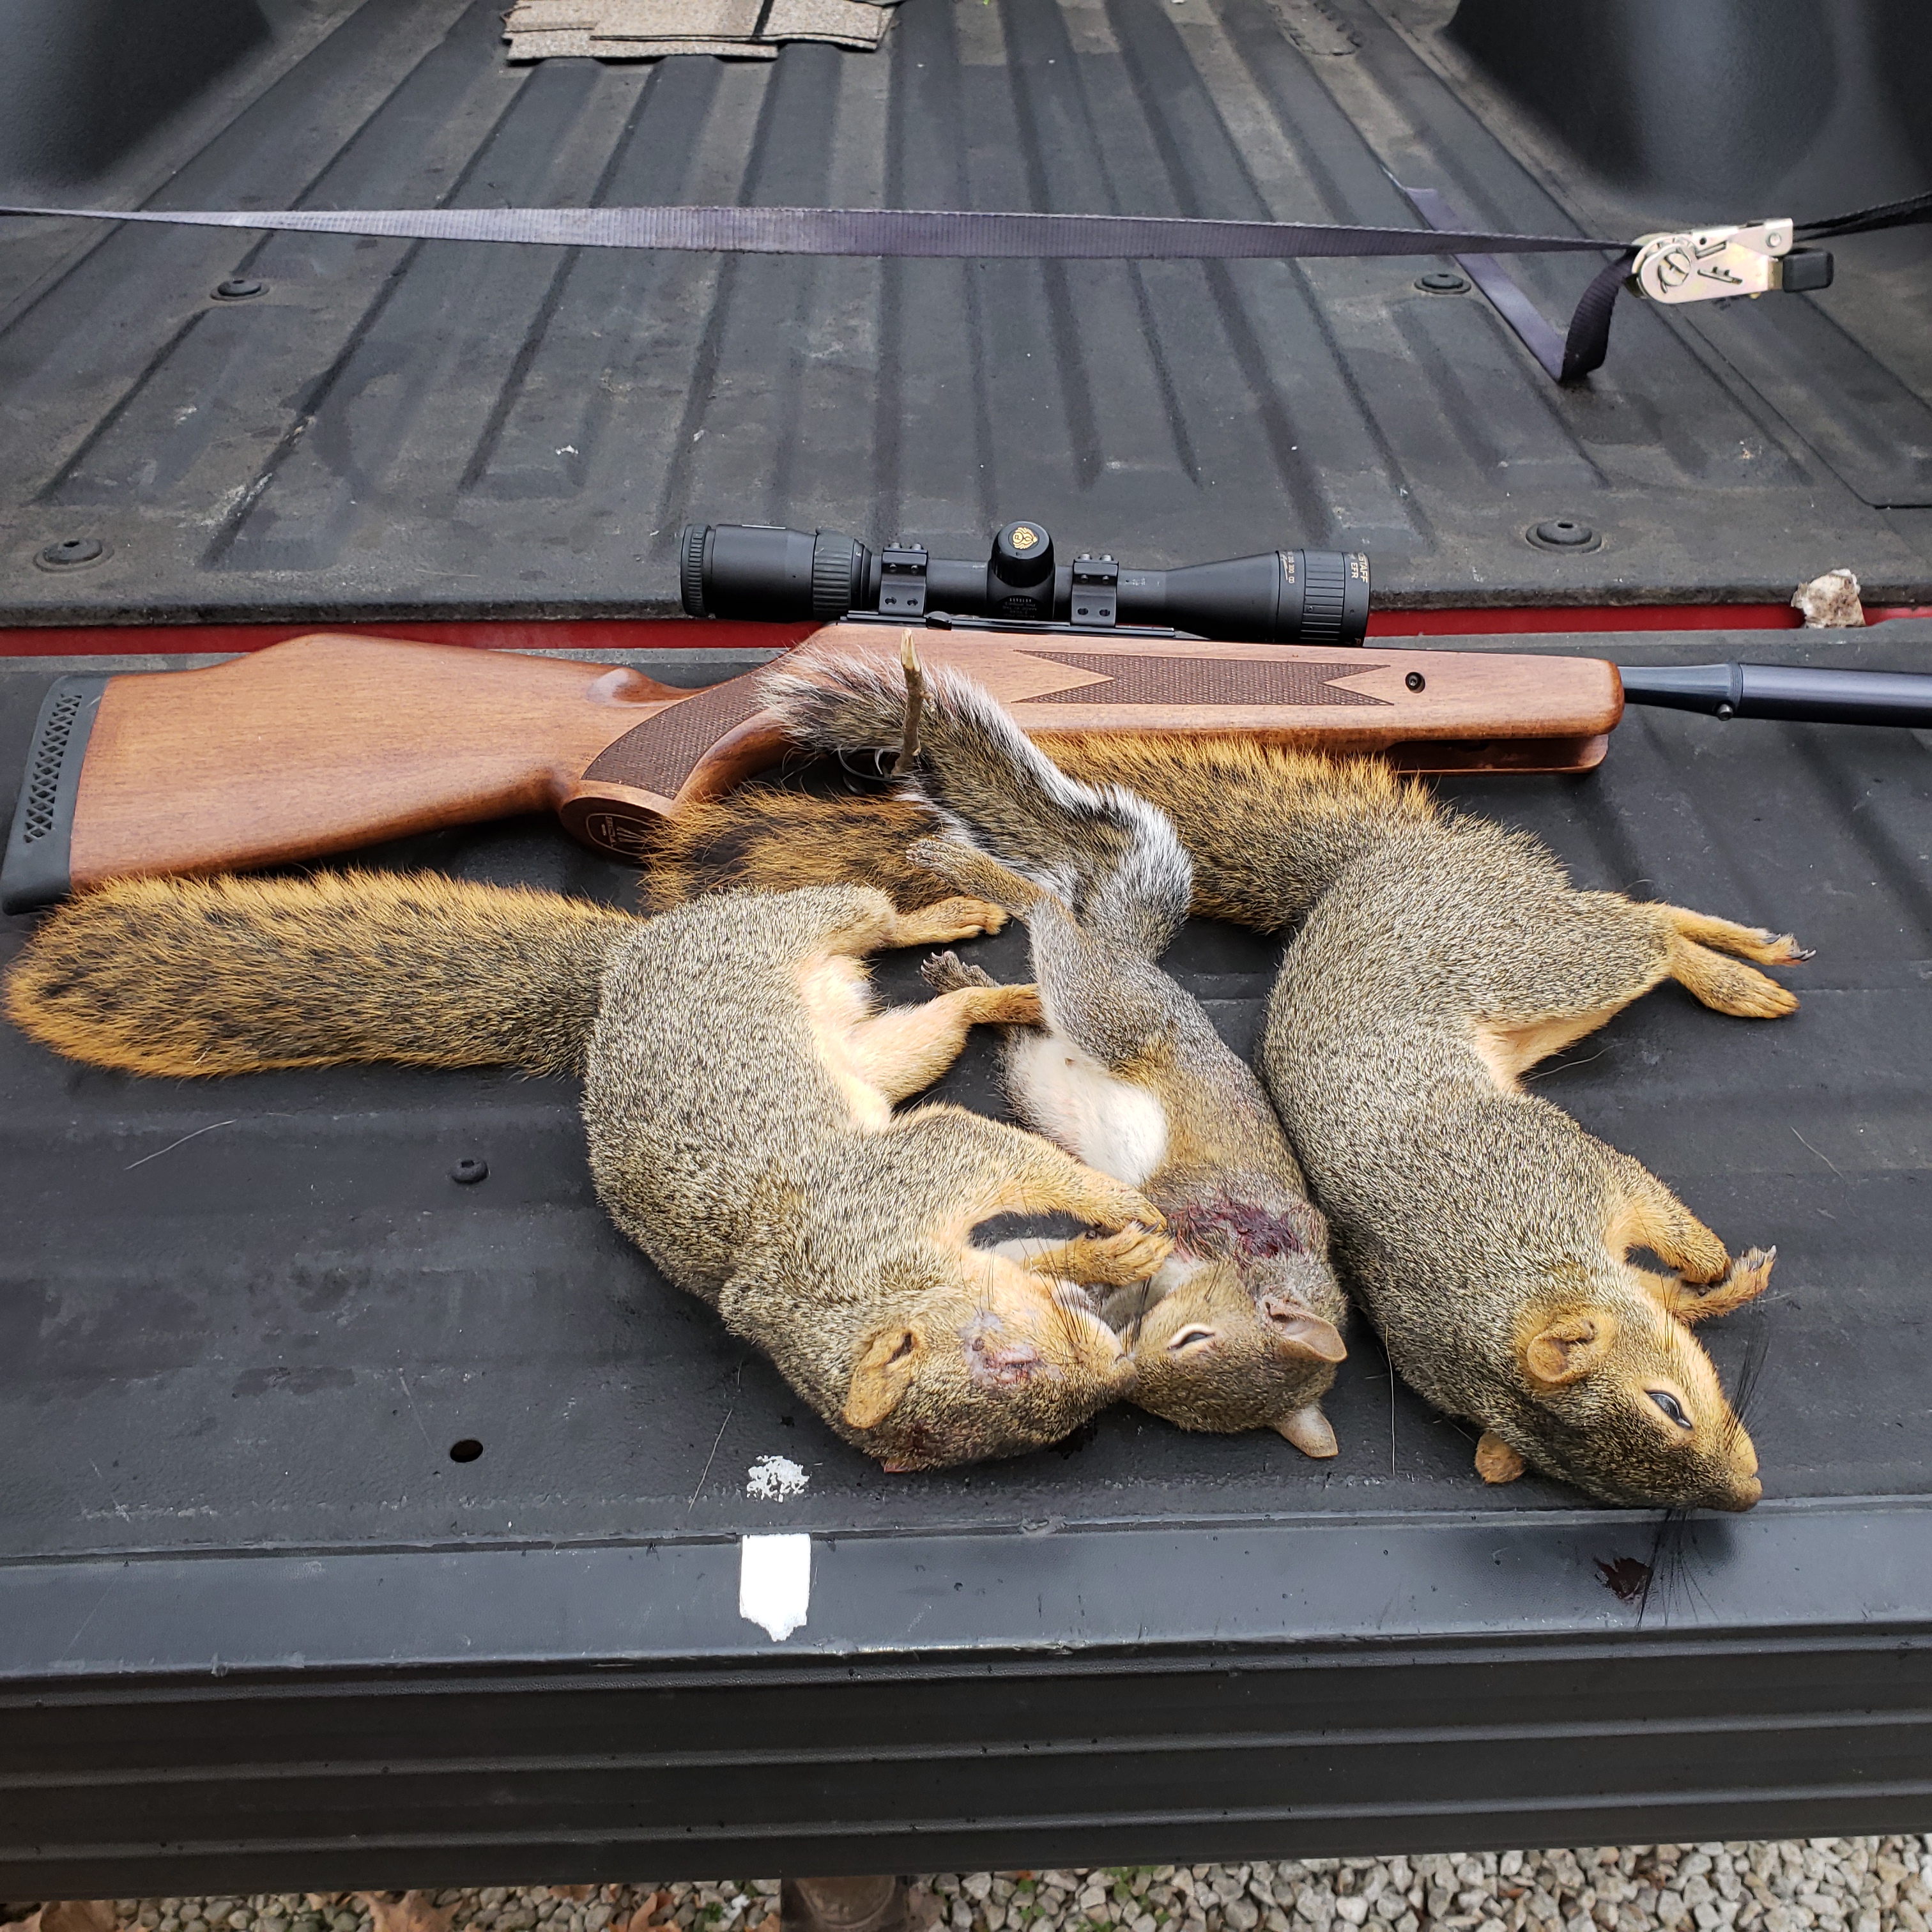 Classic .22 Rimfires That Still Make Great Squirrel Hunting Rifles